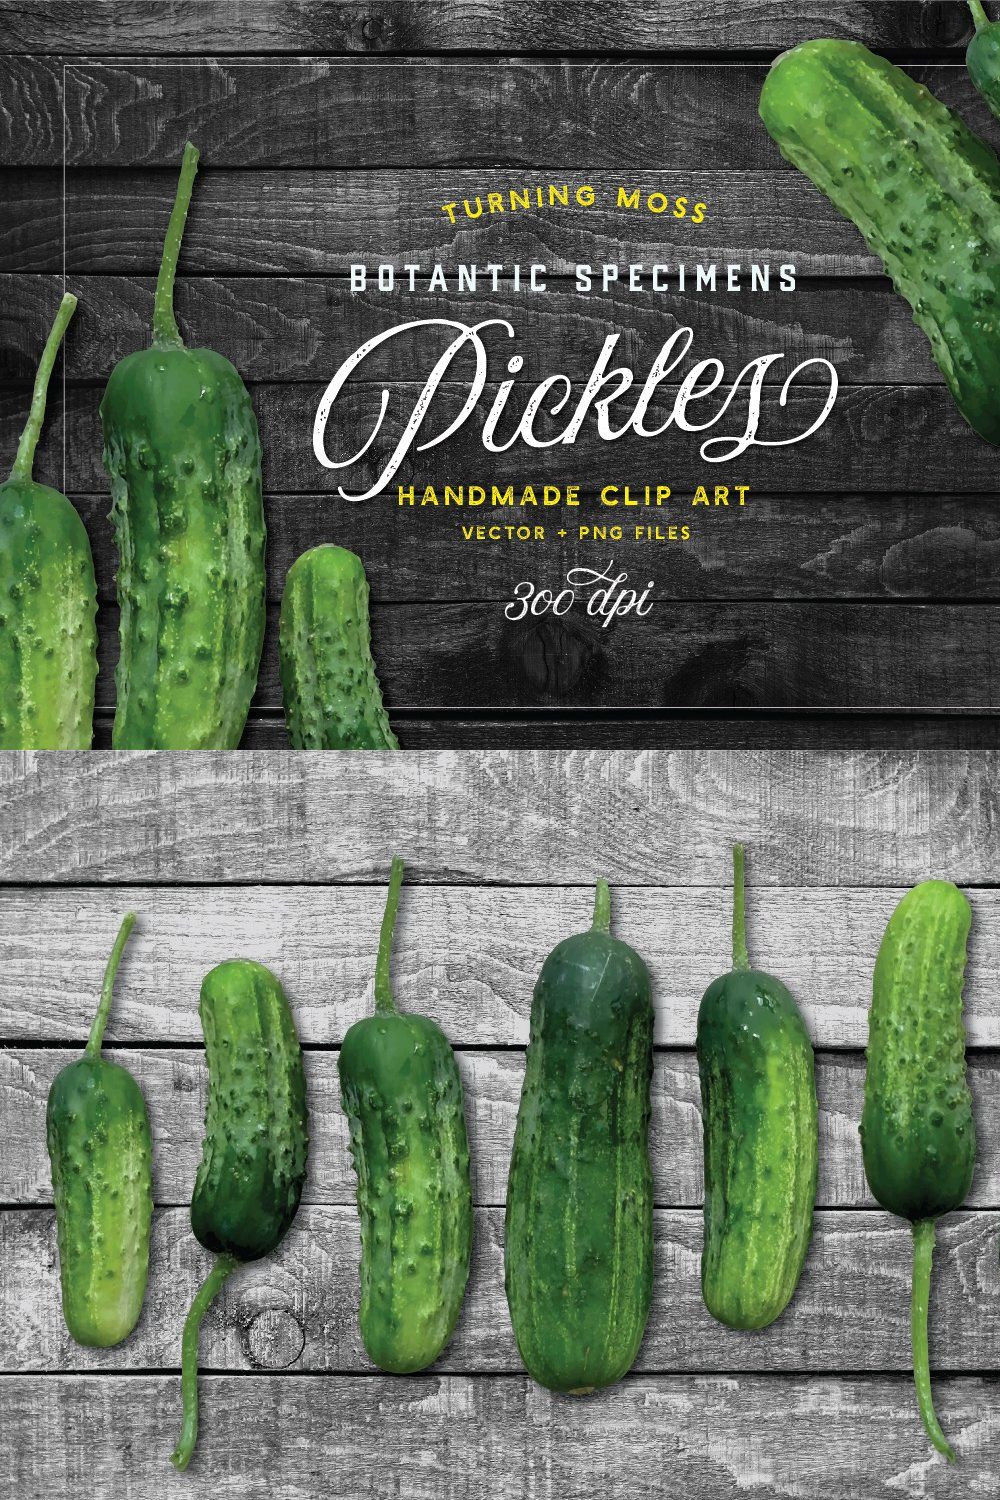 Pickle Vector - Botanic Specimens pinterest preview image.